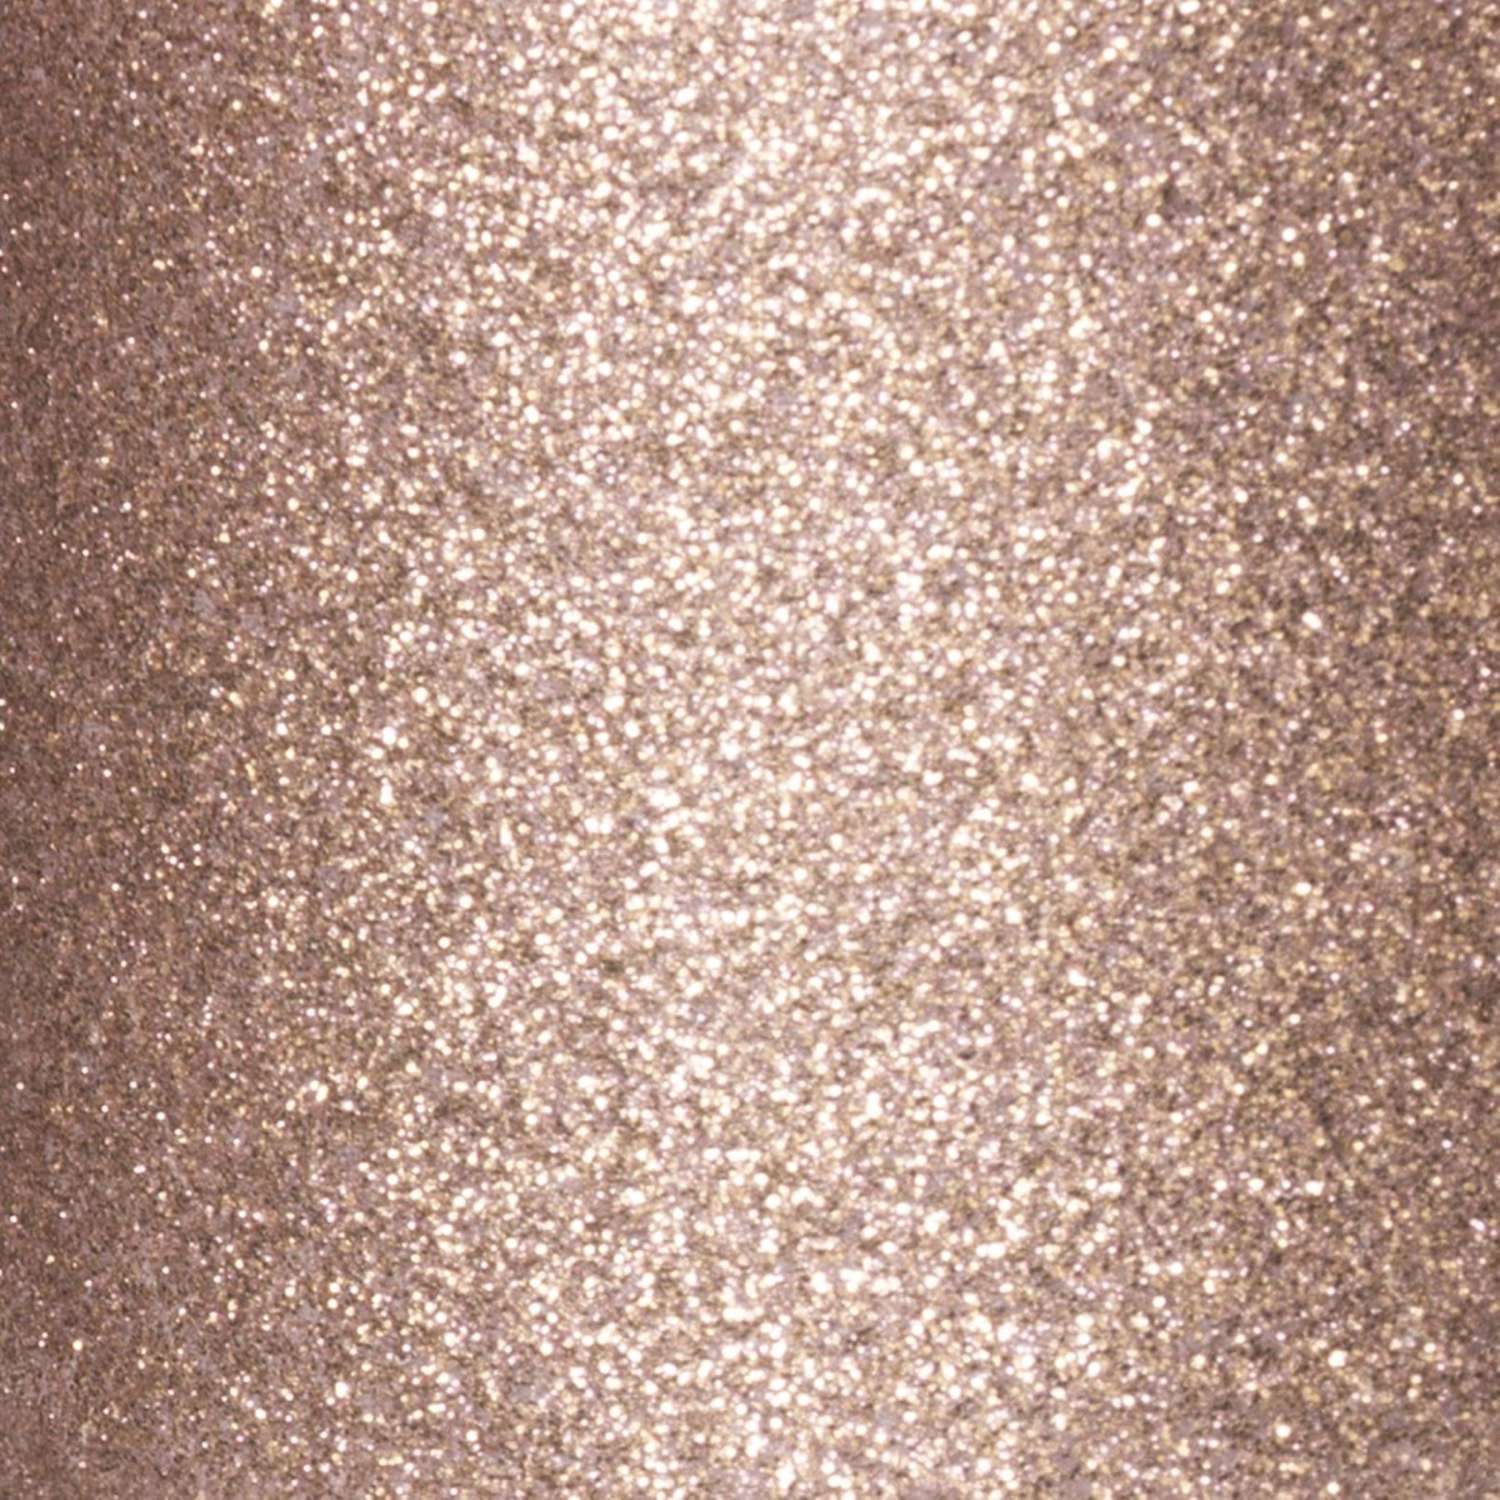 Rust-Oleum Imagine Glitter Rose Gold Spray Paint 10.25 oz - Ace Hardware